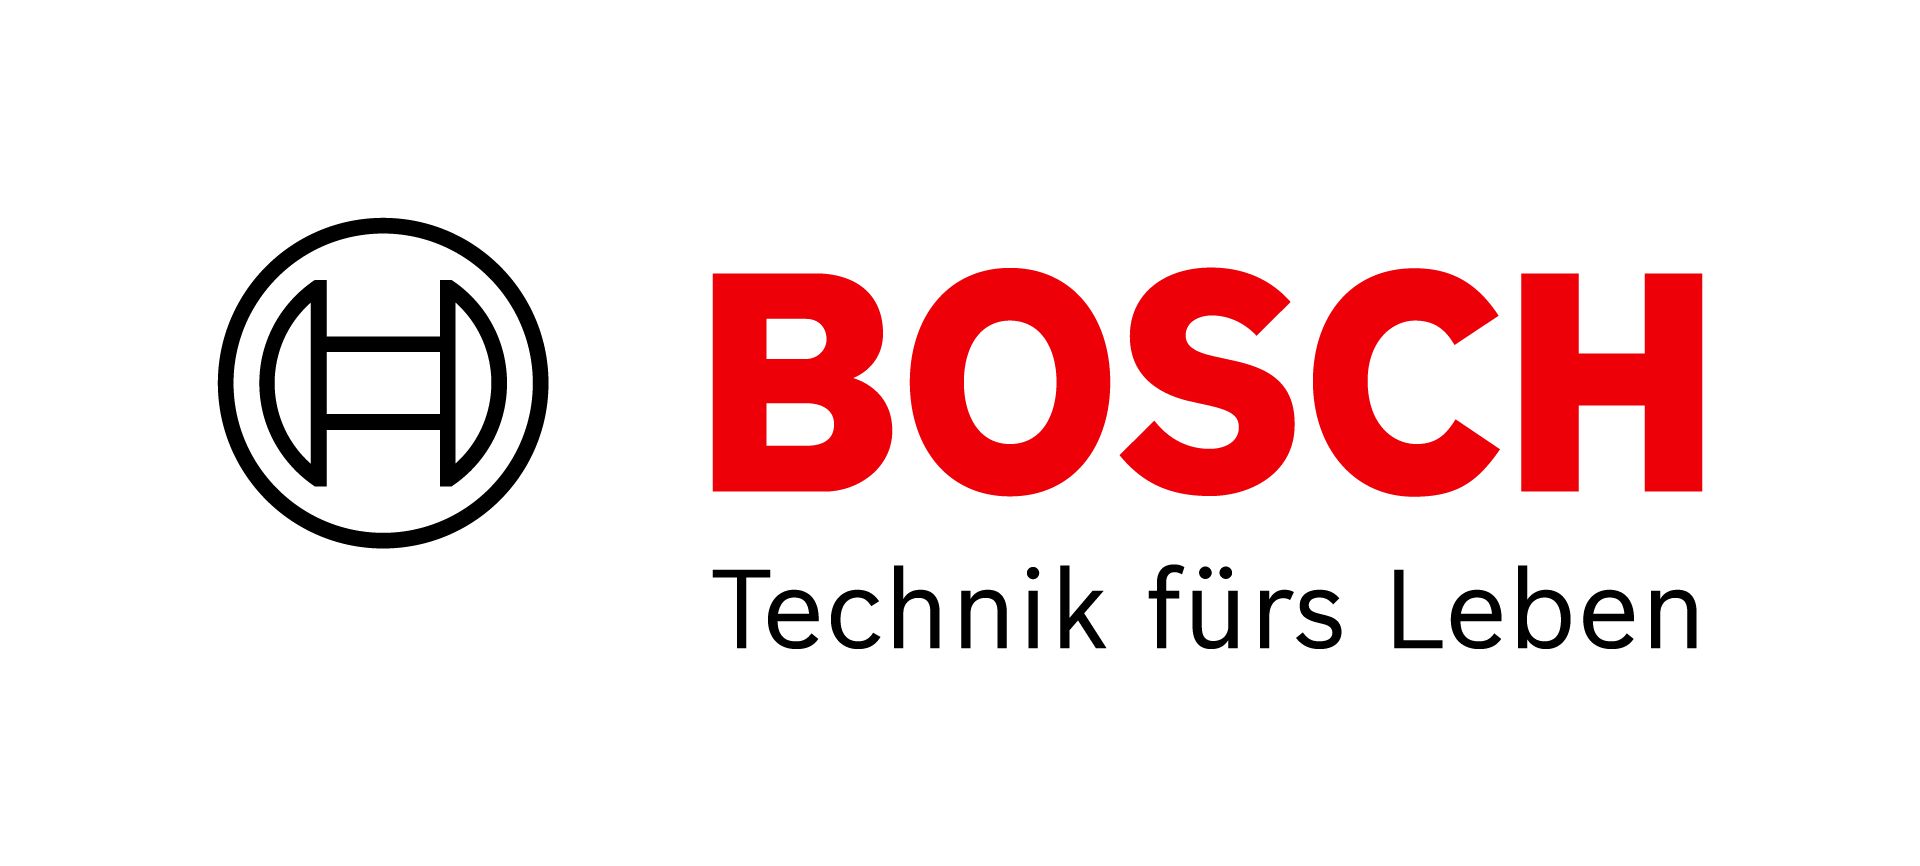 Bosch_symbol_logo_black_red_DE(3)